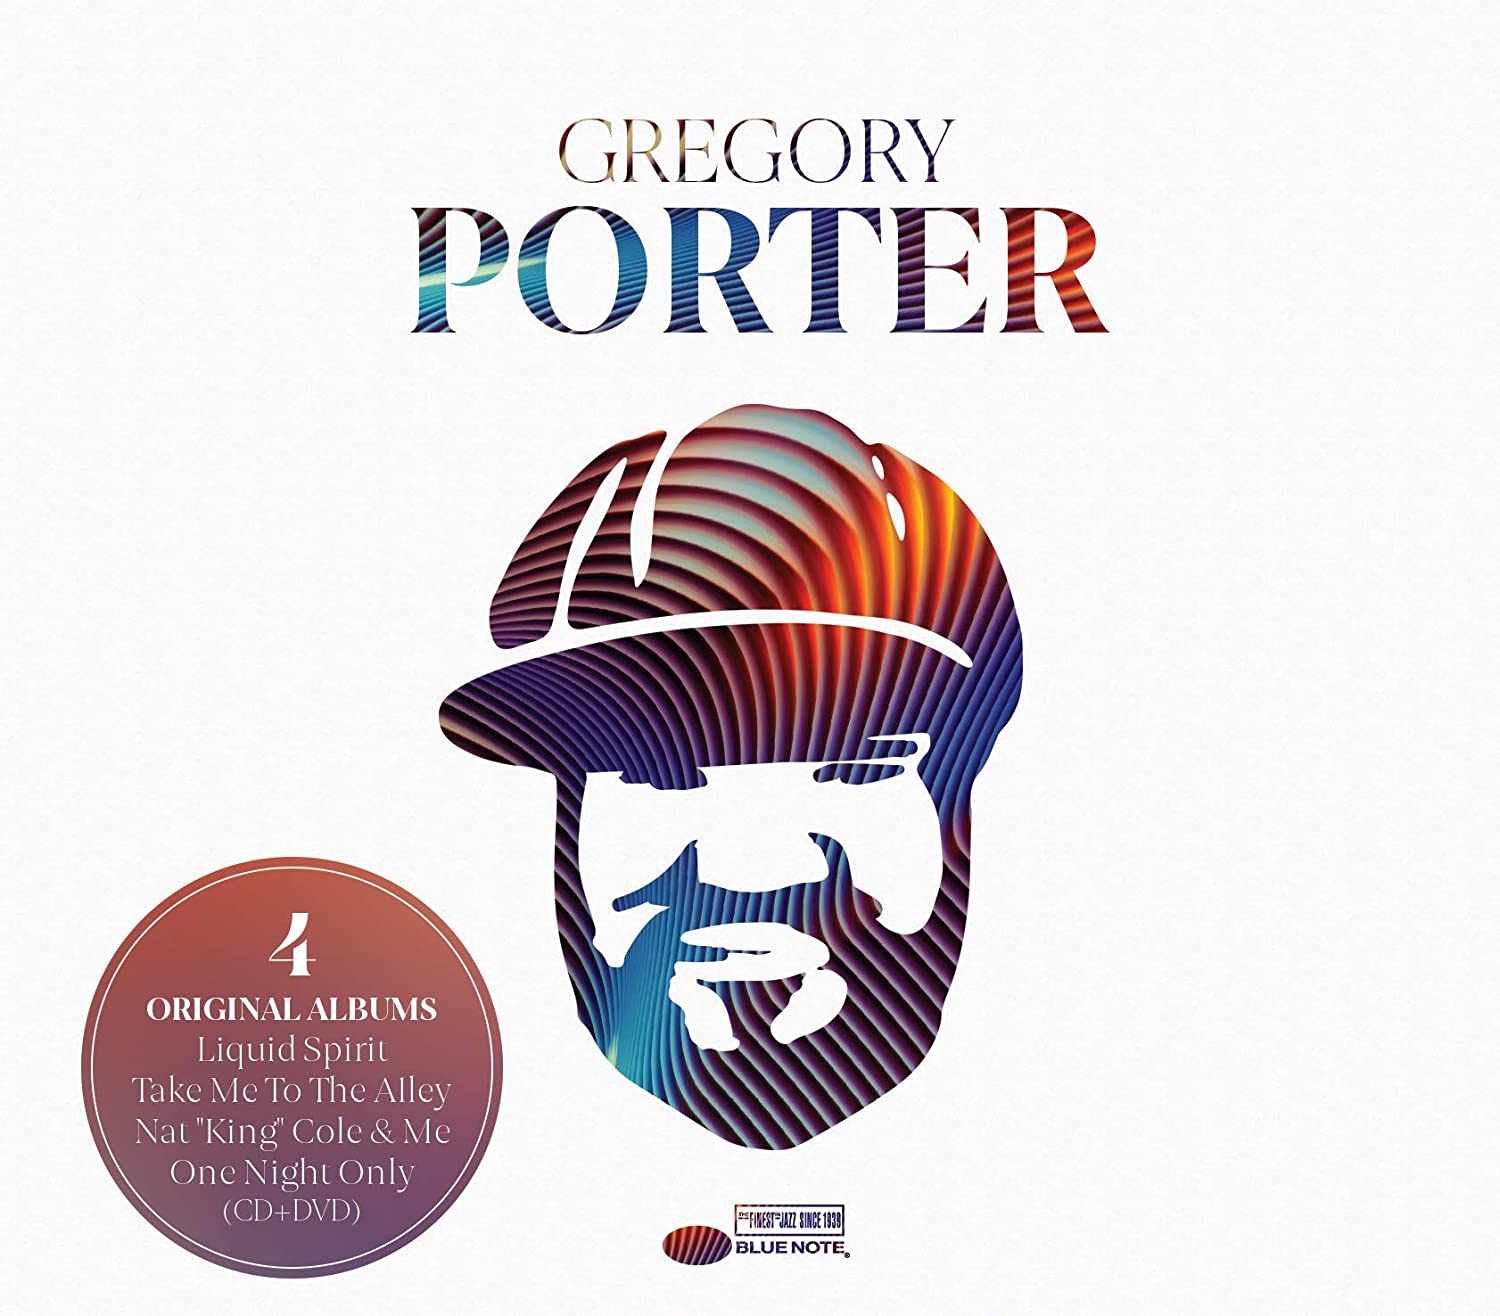 GREGORY PORTER - Gregory Porter cover 